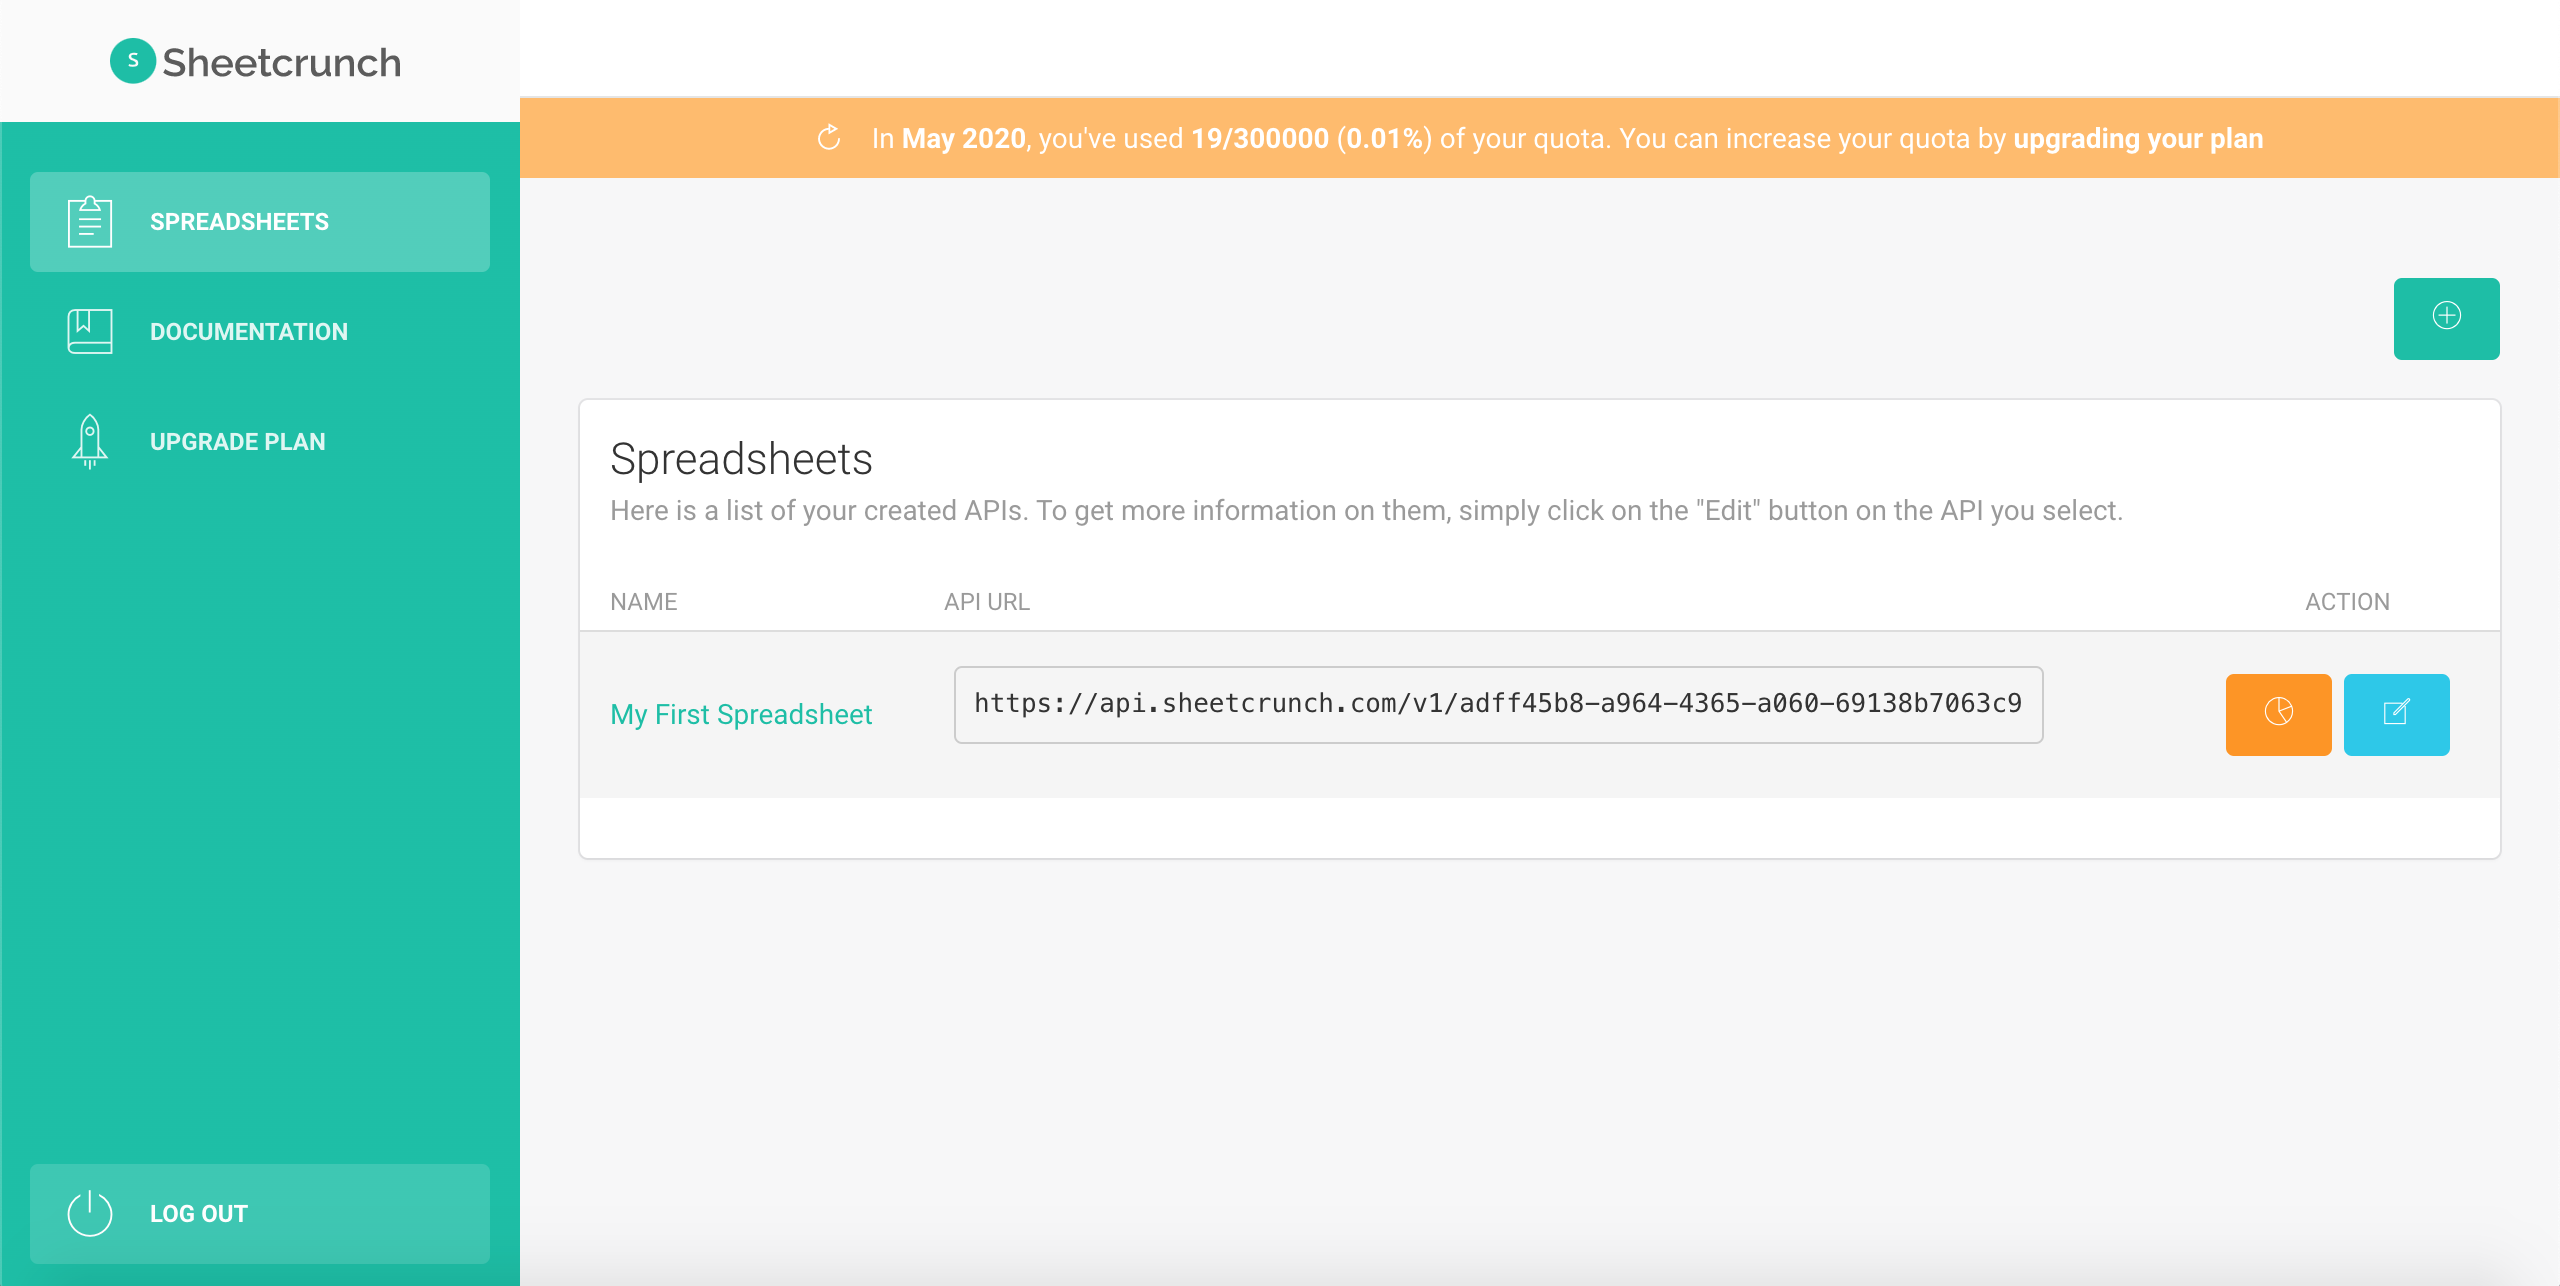 Sheetcrunch | Your First Spreadsheet